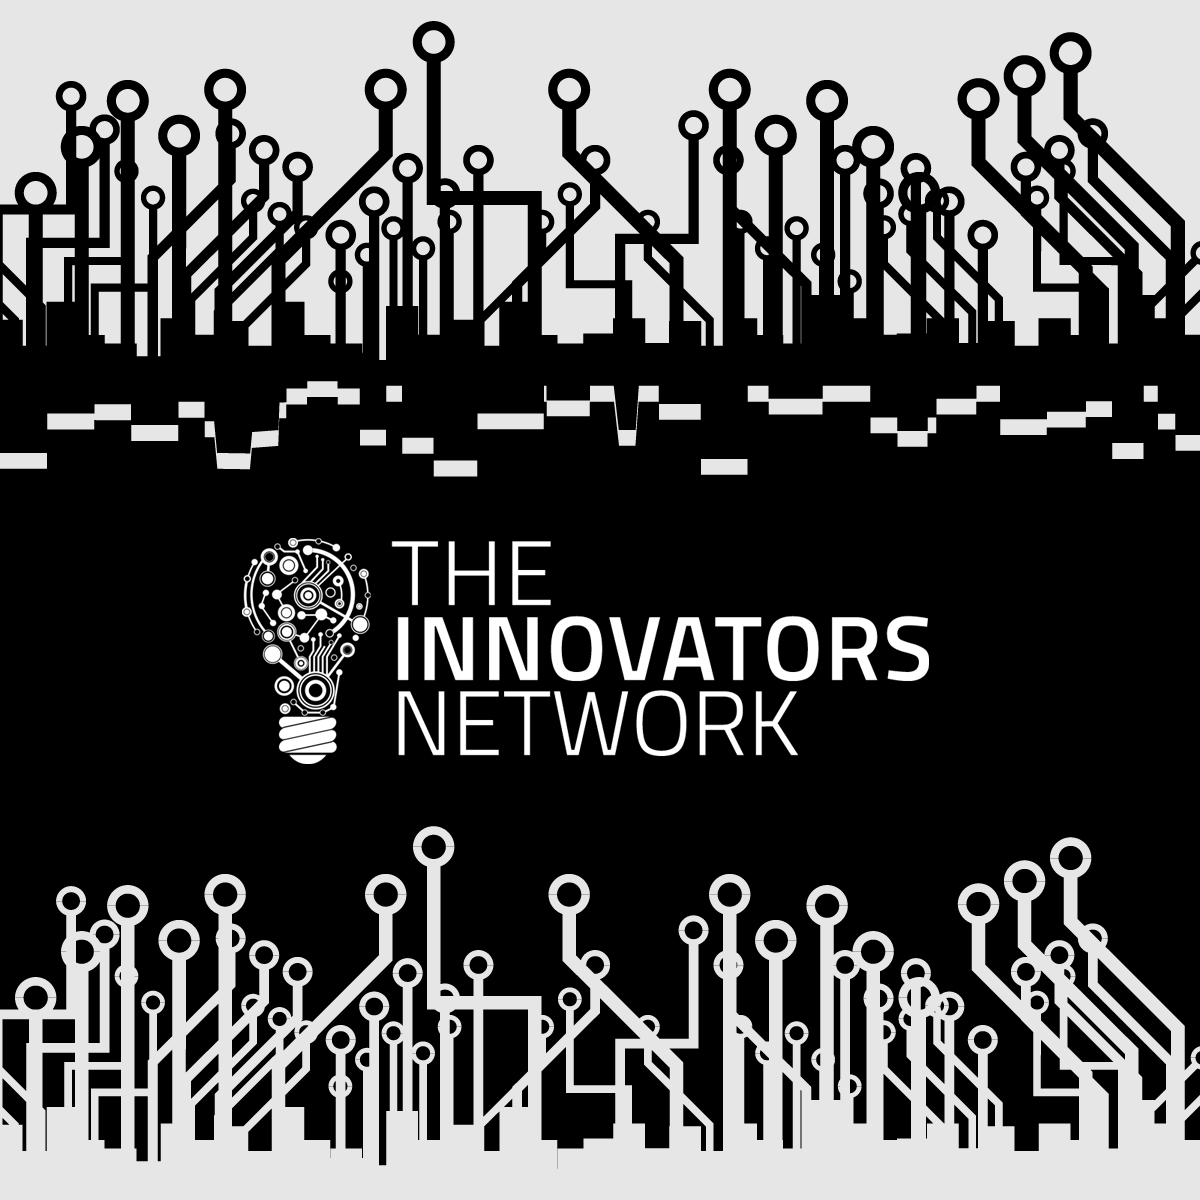 The Innovators Network: Winning In The Emerging Innovation Economy